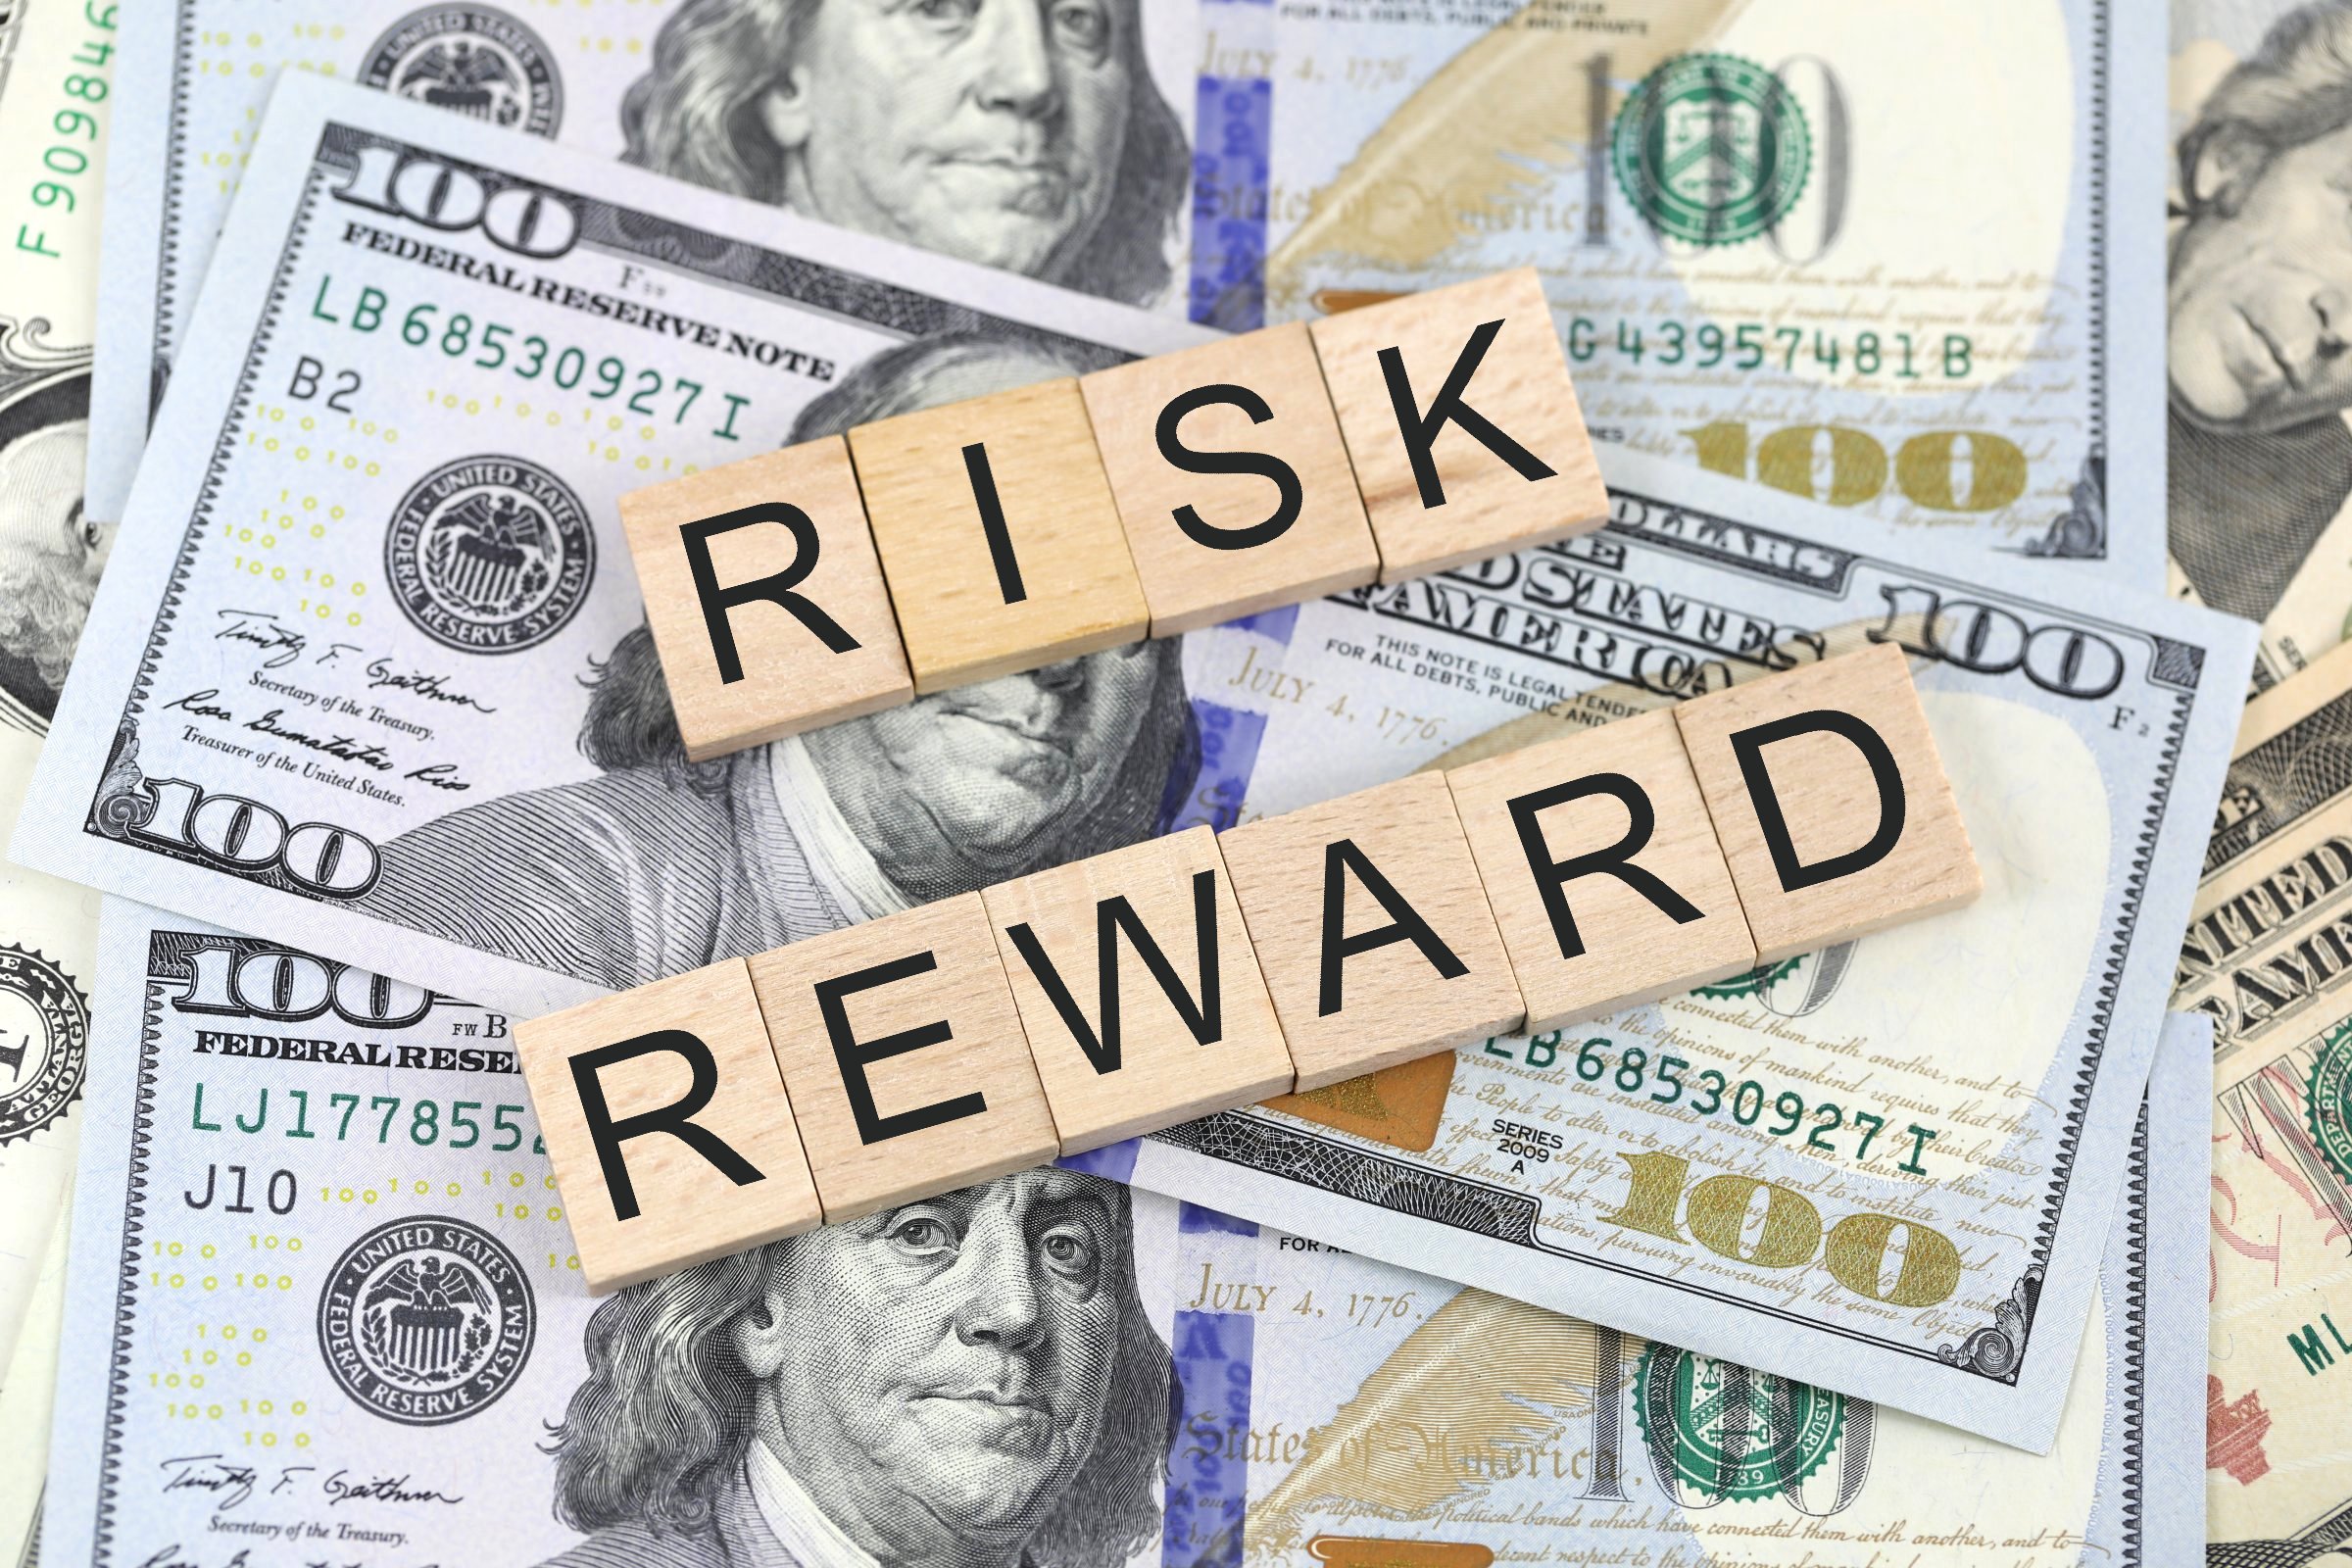 risk reward